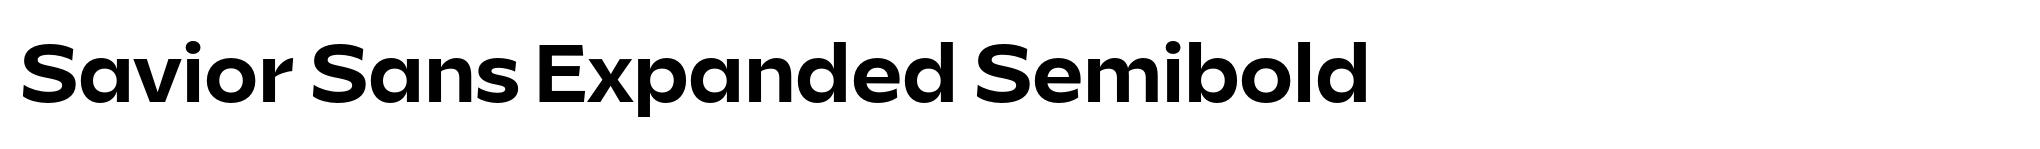 Savior Sans Expanded Semibold image